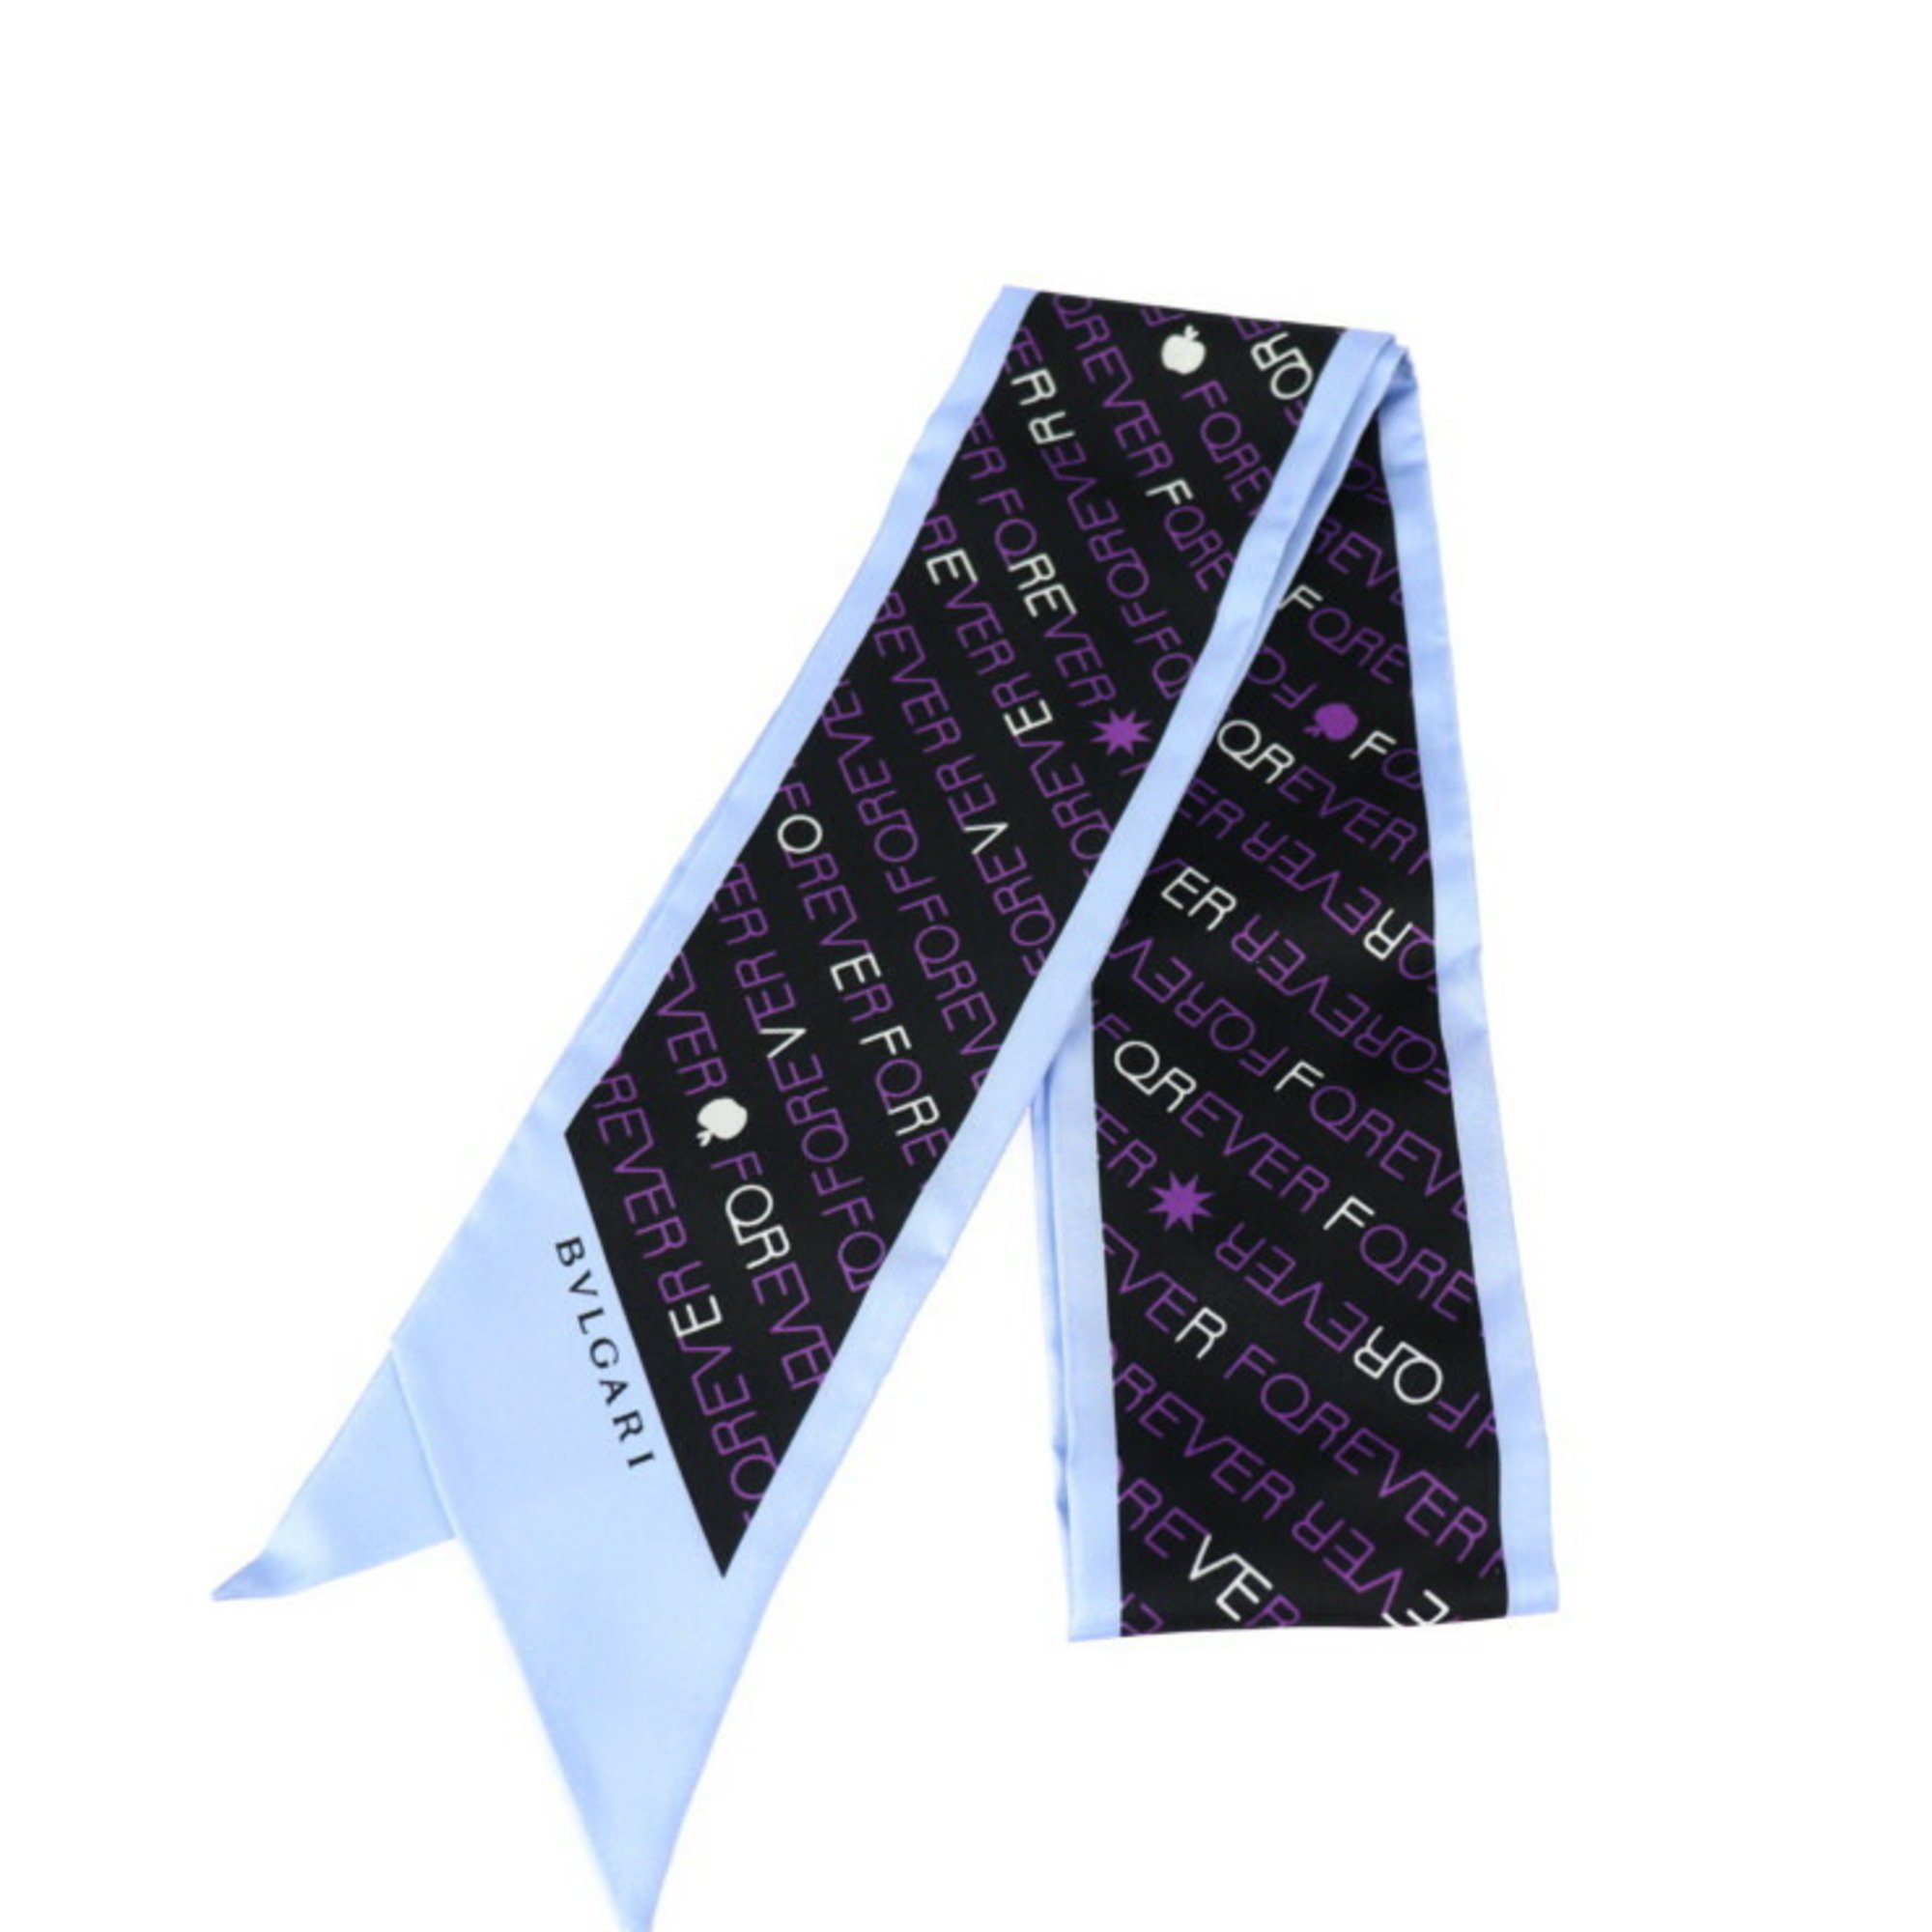 BVLGARI Bvlgari scarf 100% silk black light blue purple ribbon apple heart snake arrow FOREVER pattern